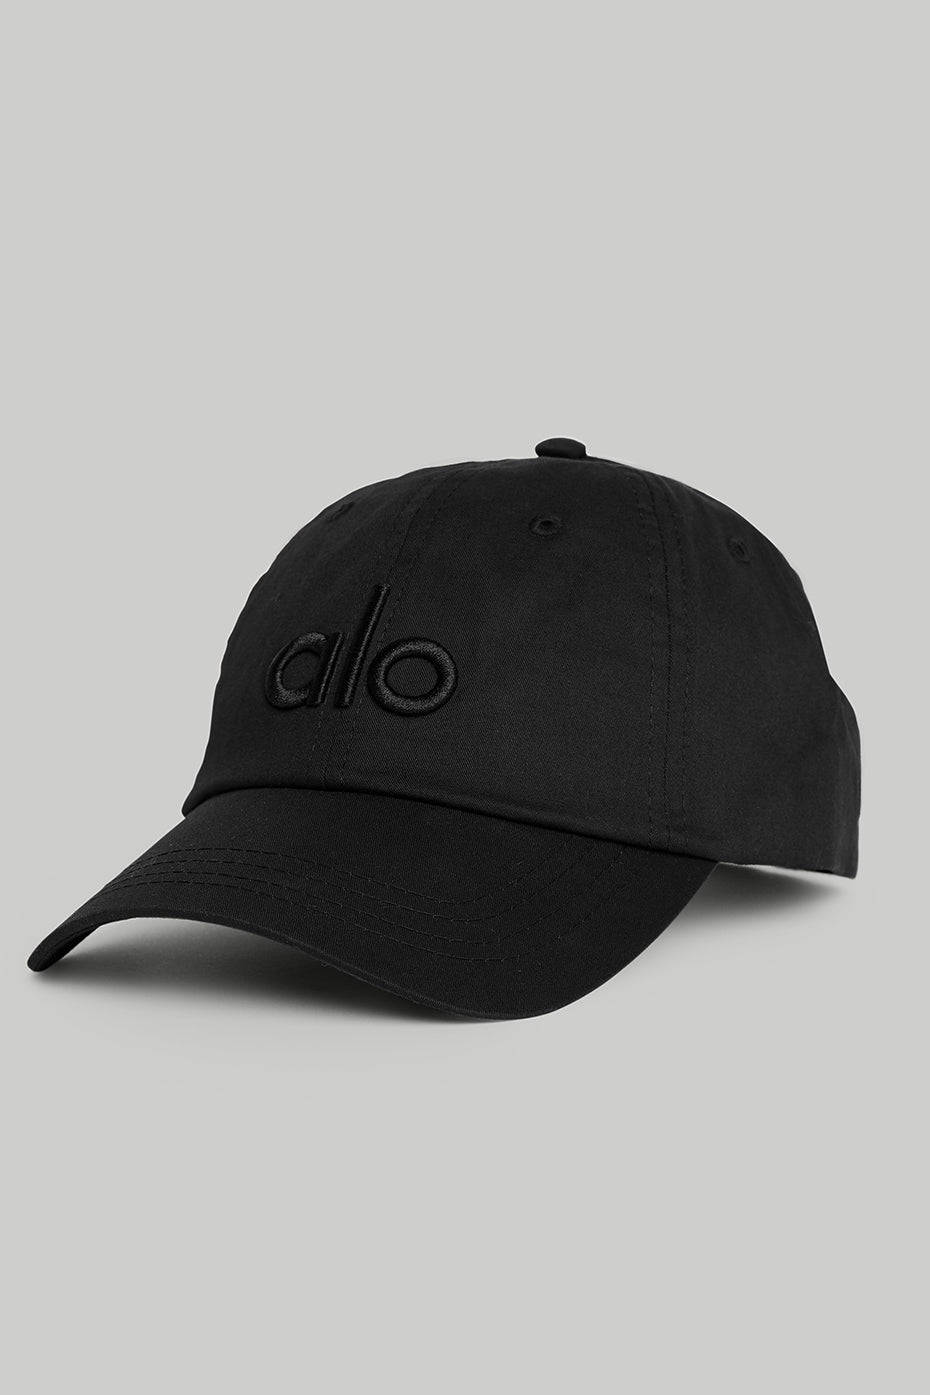 Off Duty Cap, Alo Yoga Hats